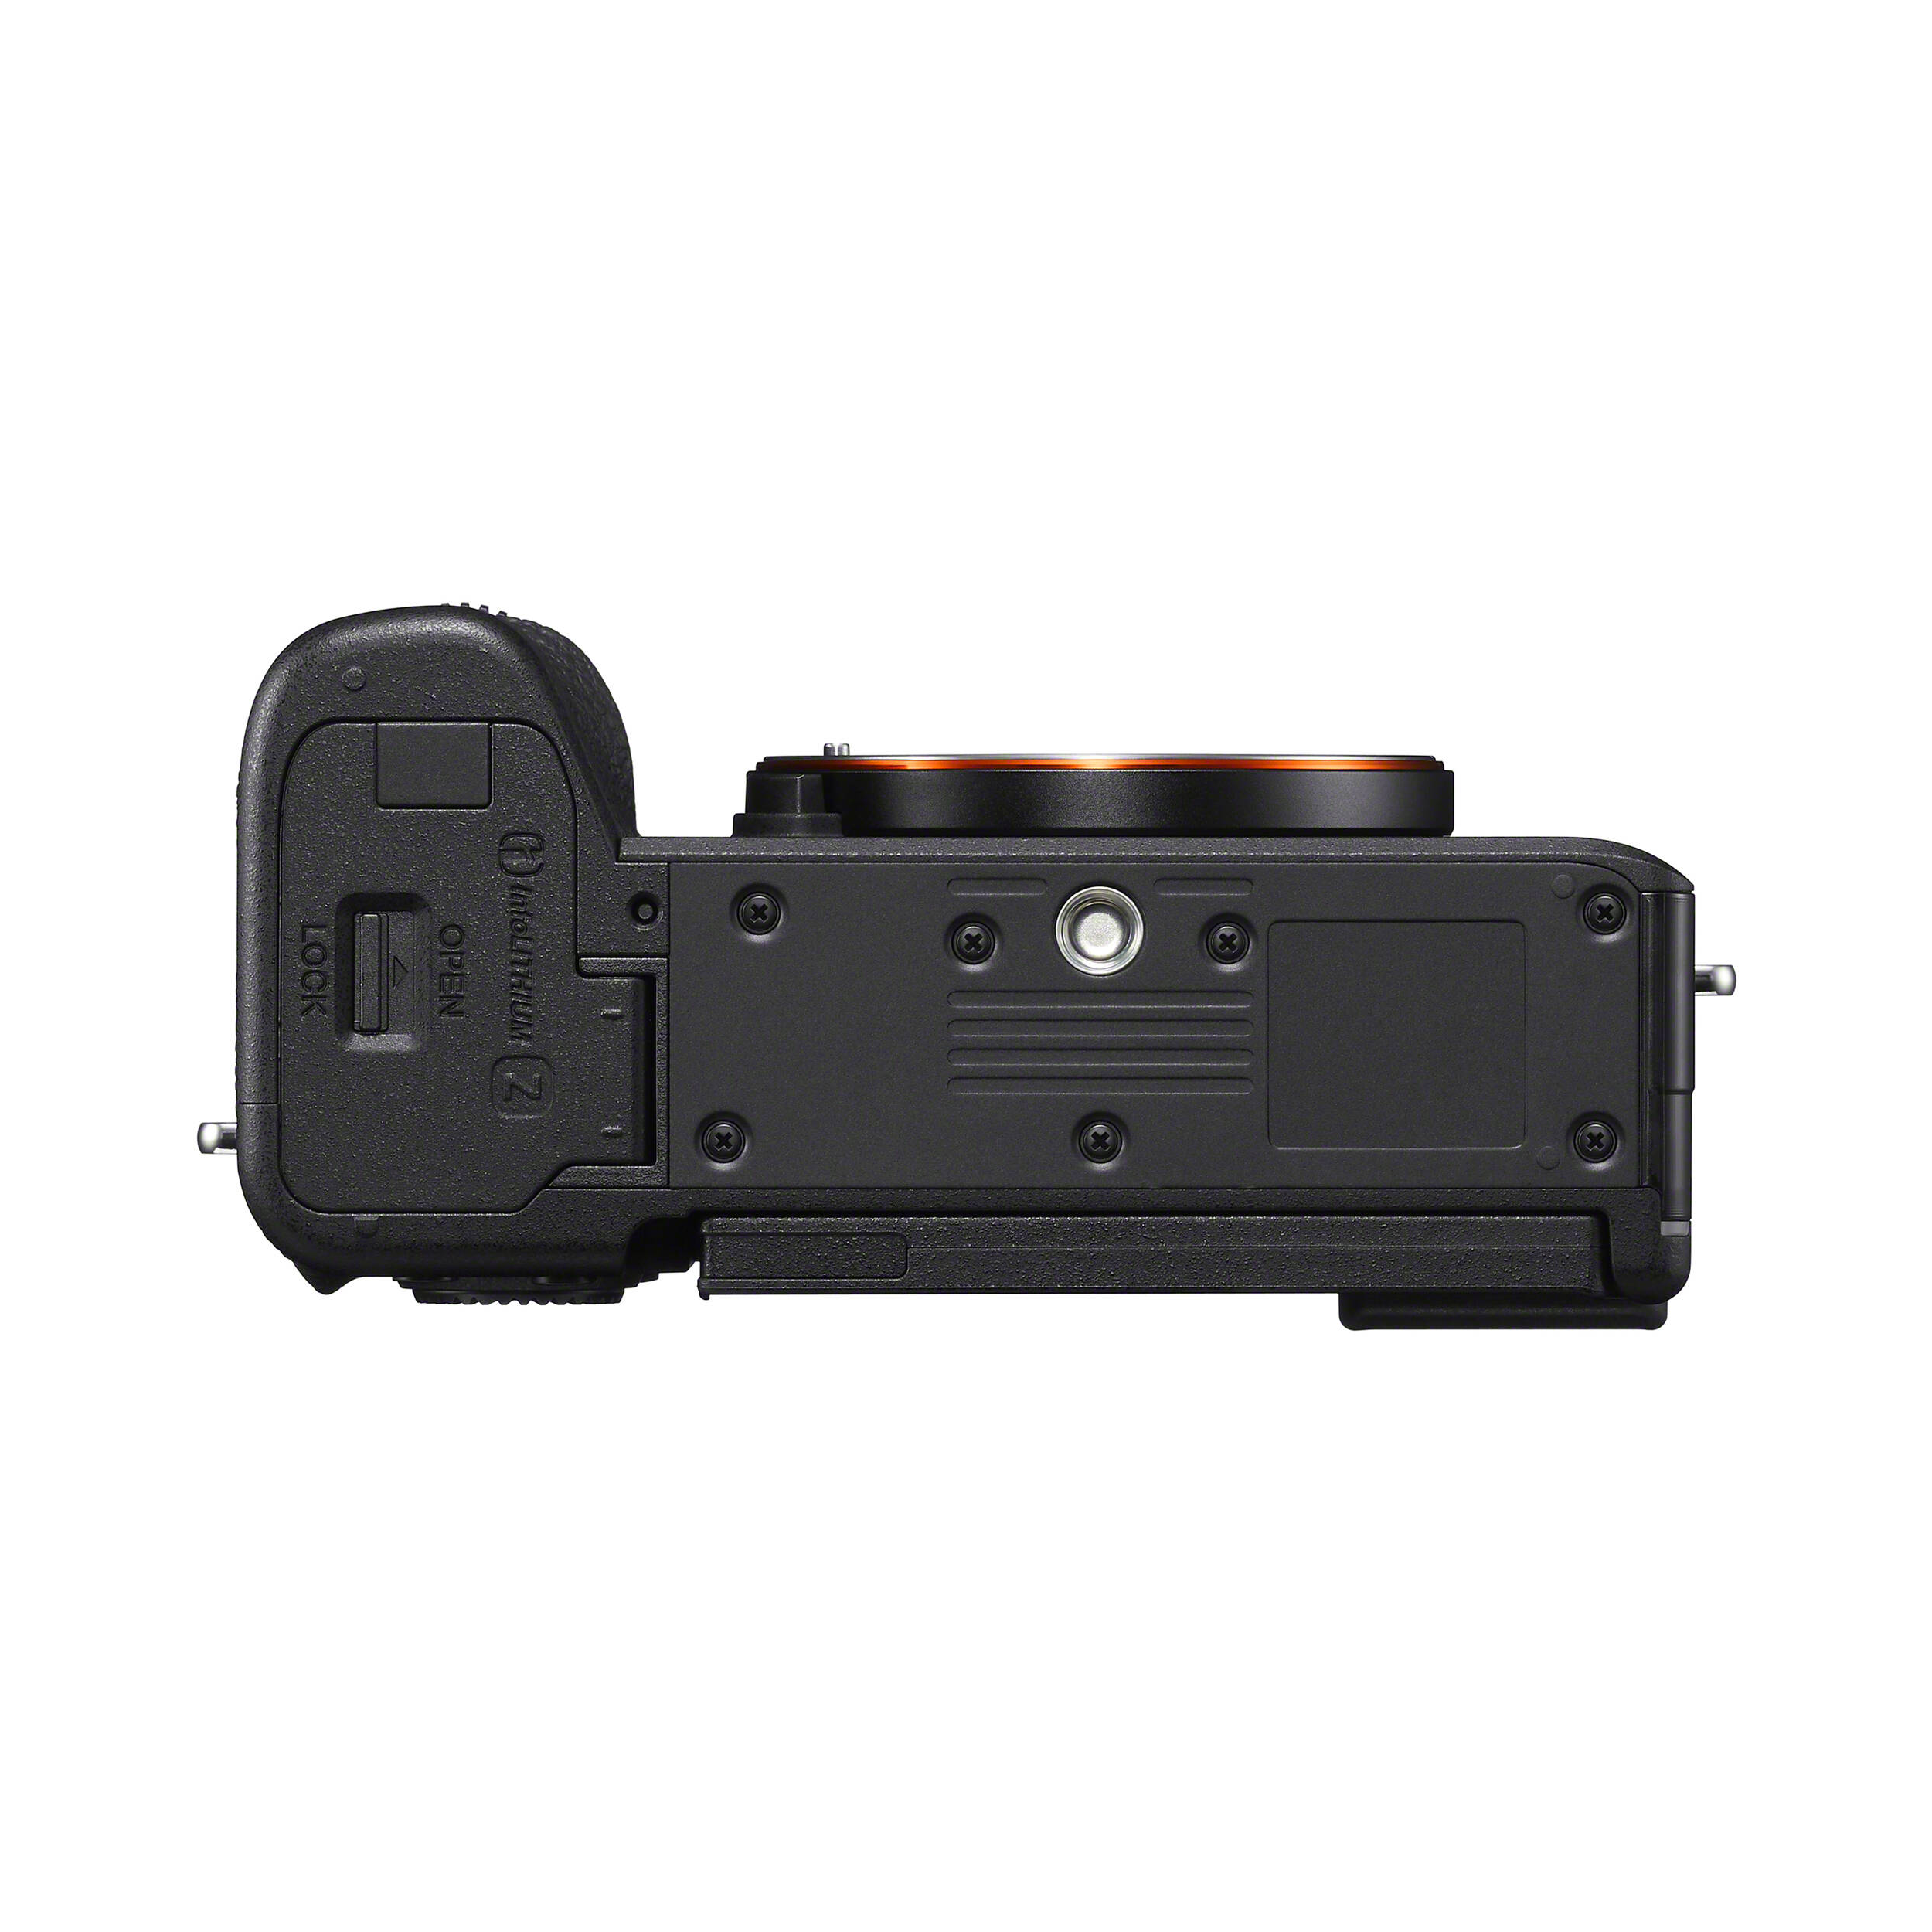 Sony a7C II Mirrorless Camera - Body Only - Black